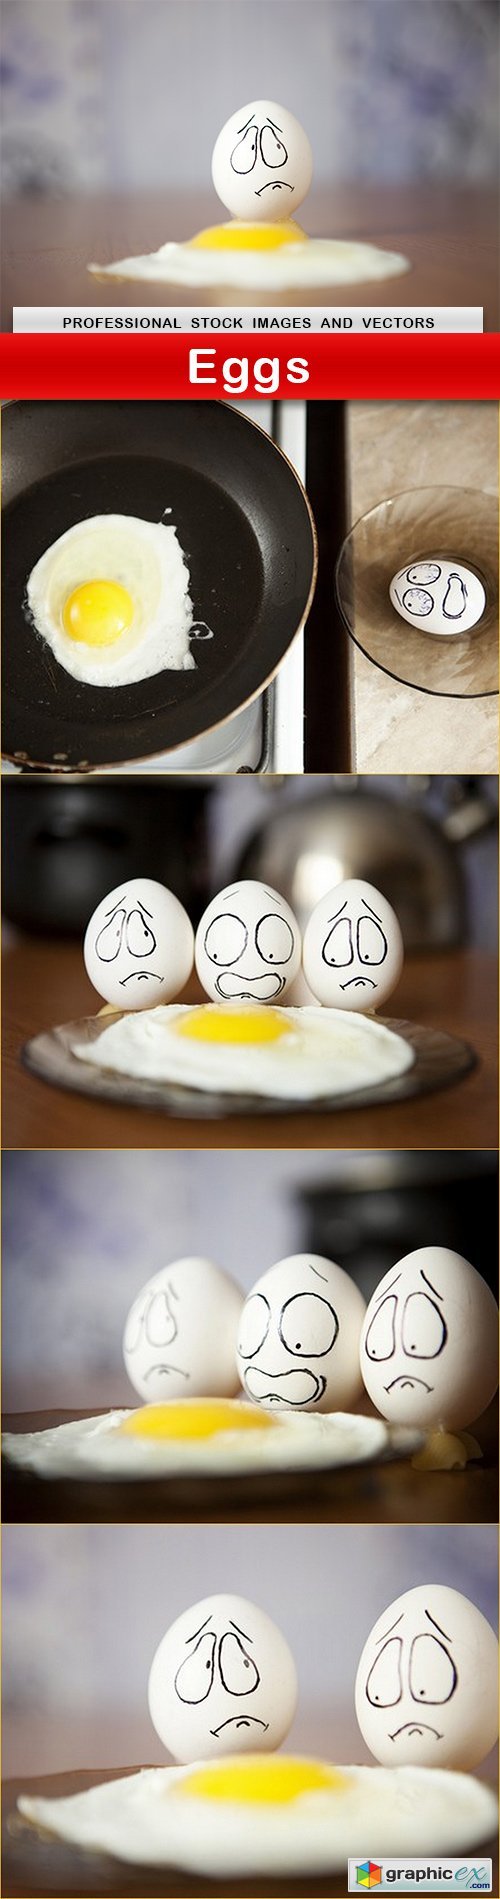 Eggs - 5 UHQ JPEG